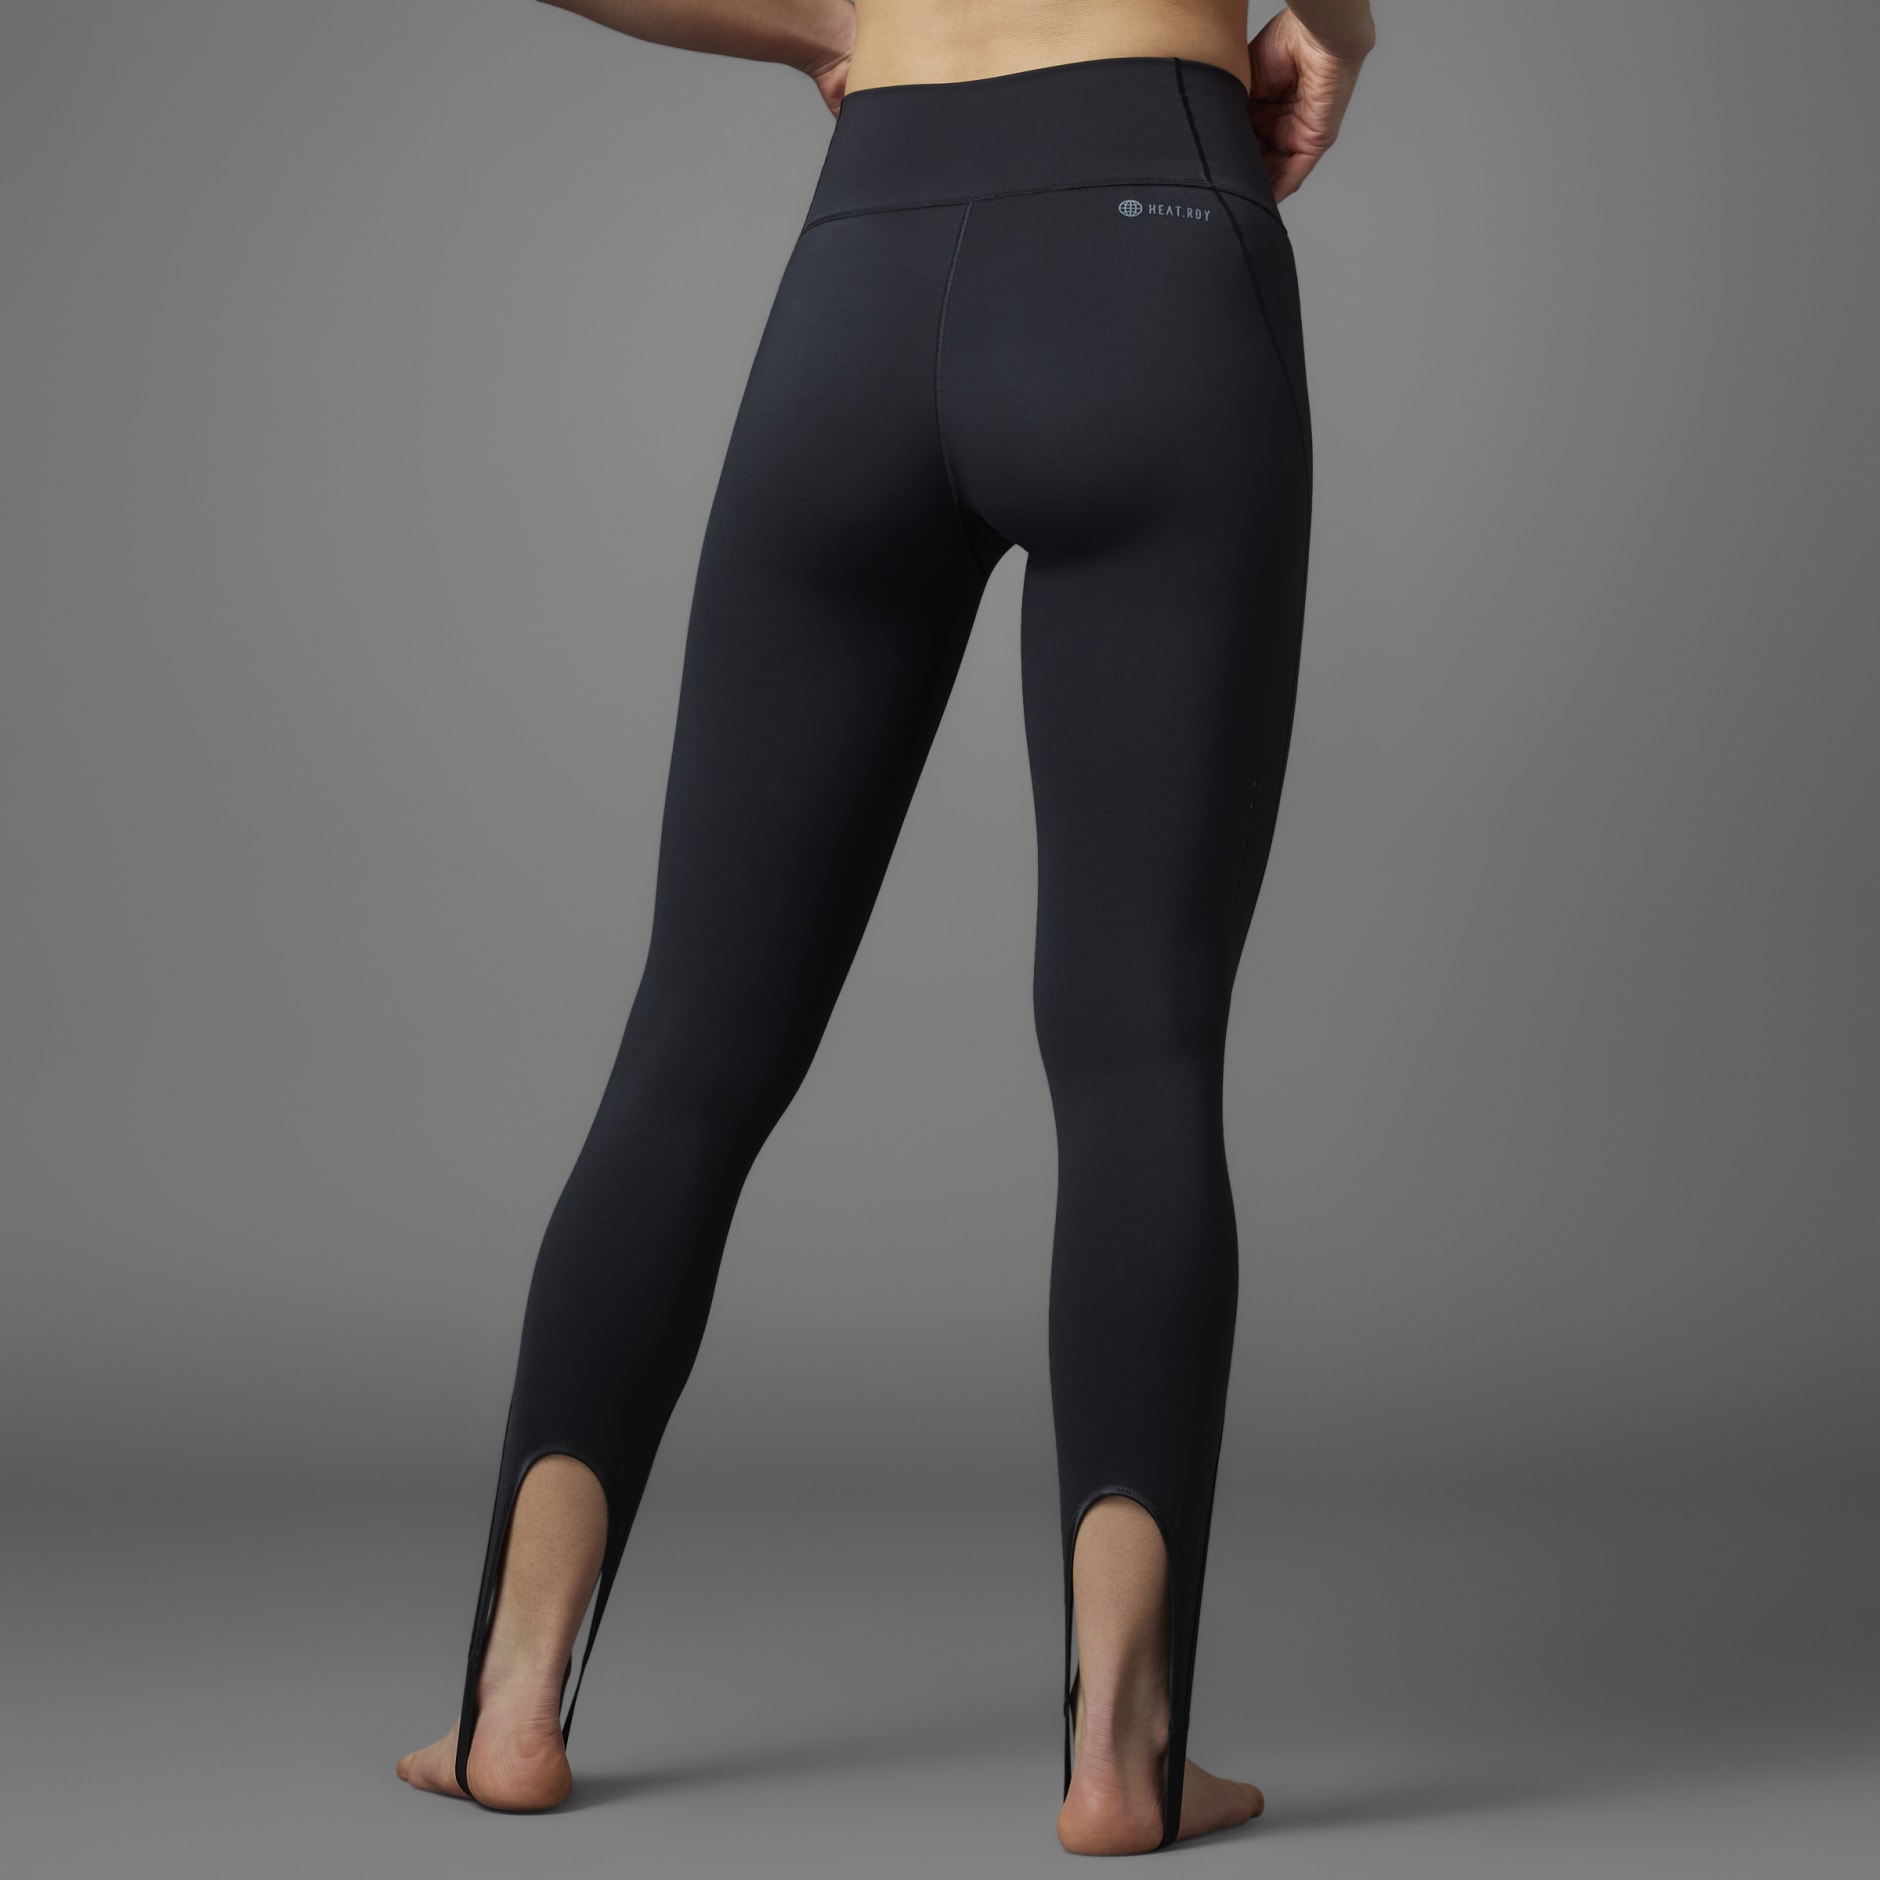 Women's Clothing - Collective Power Yoga Studio Leggings - Black